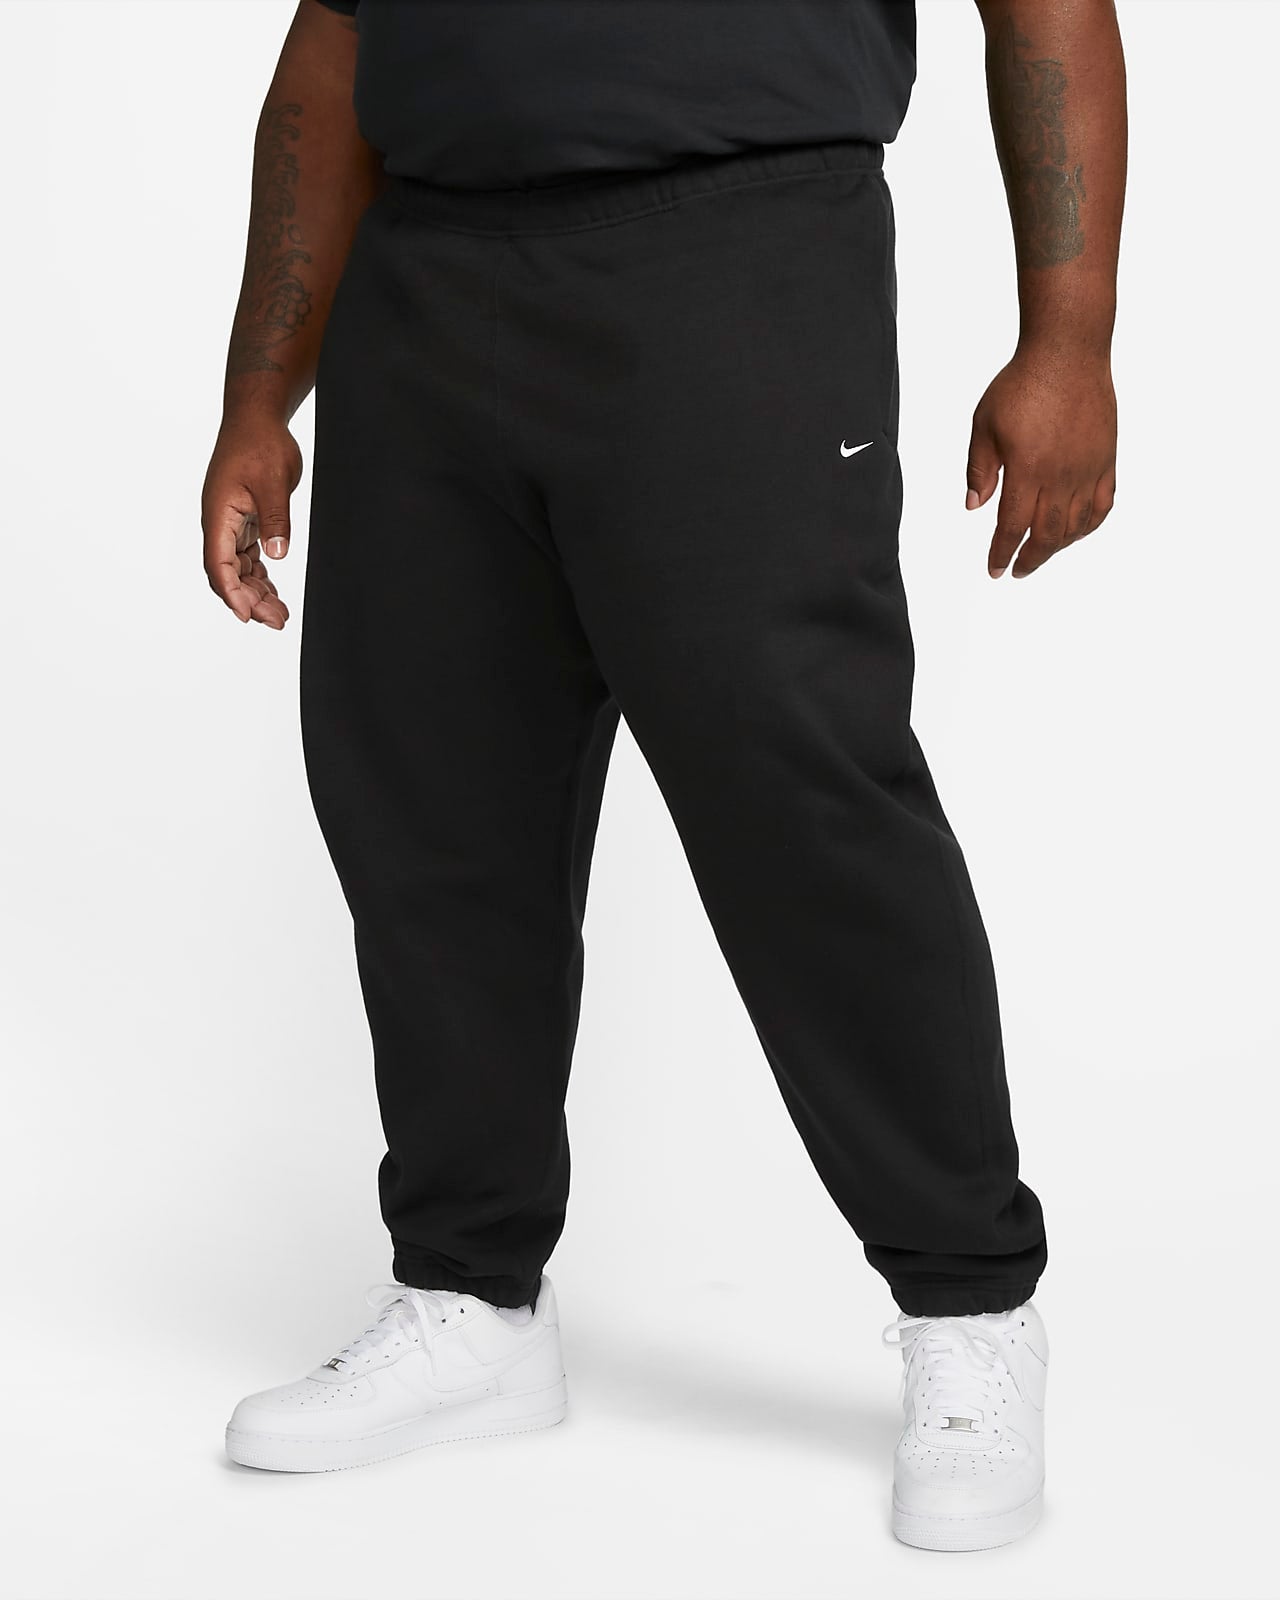 How Big Is The Nike Logo On Sweatpants? – solowomen